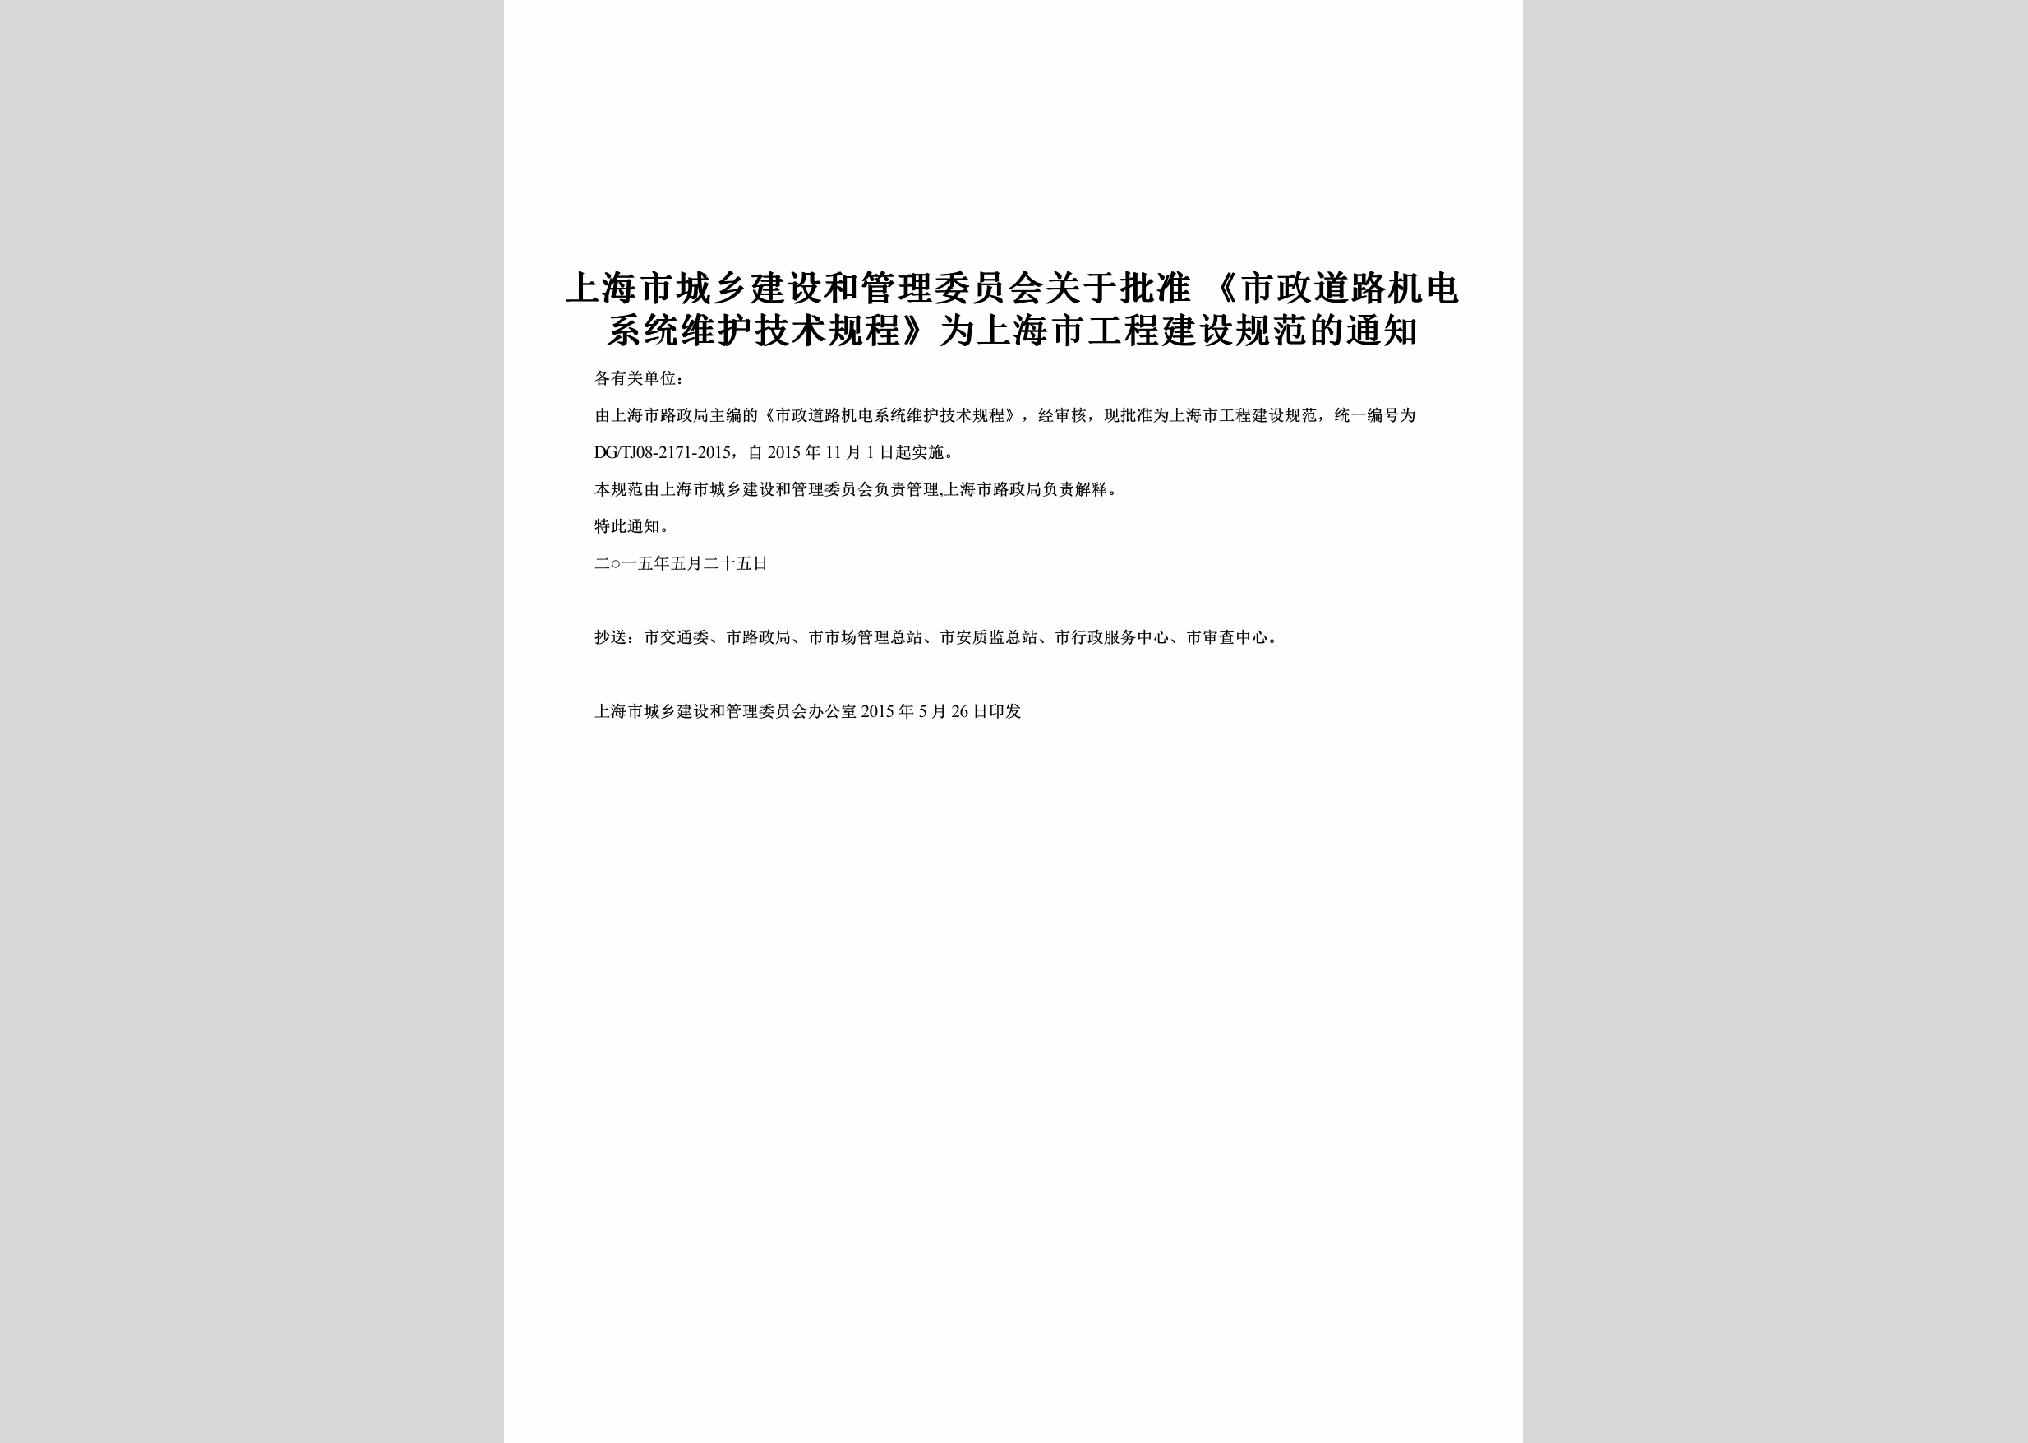 SH-DLWHGFTZ-2015：关于批准《市政道路机电系统维护技术规程》为上海市工程建设规范的通知